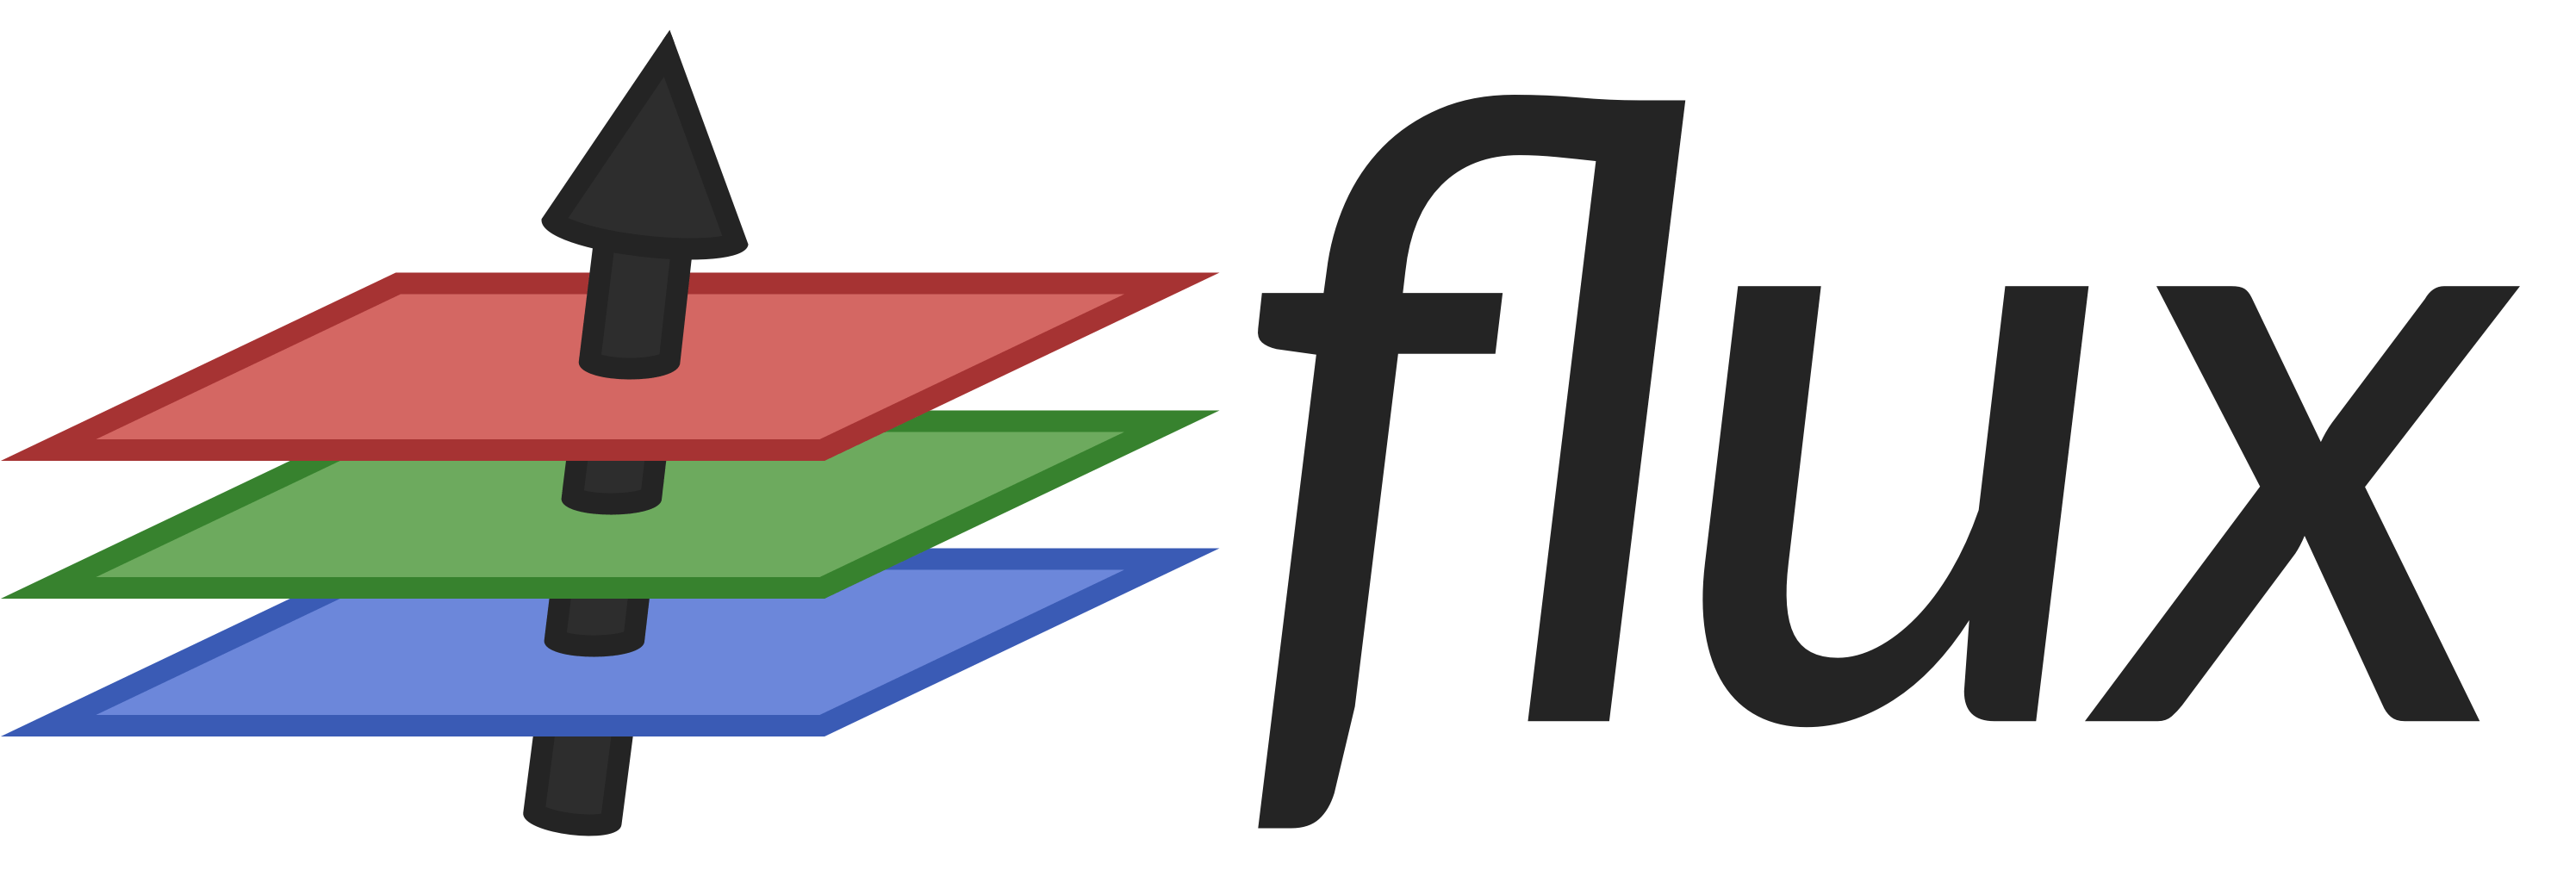 Julia Logo - Flux